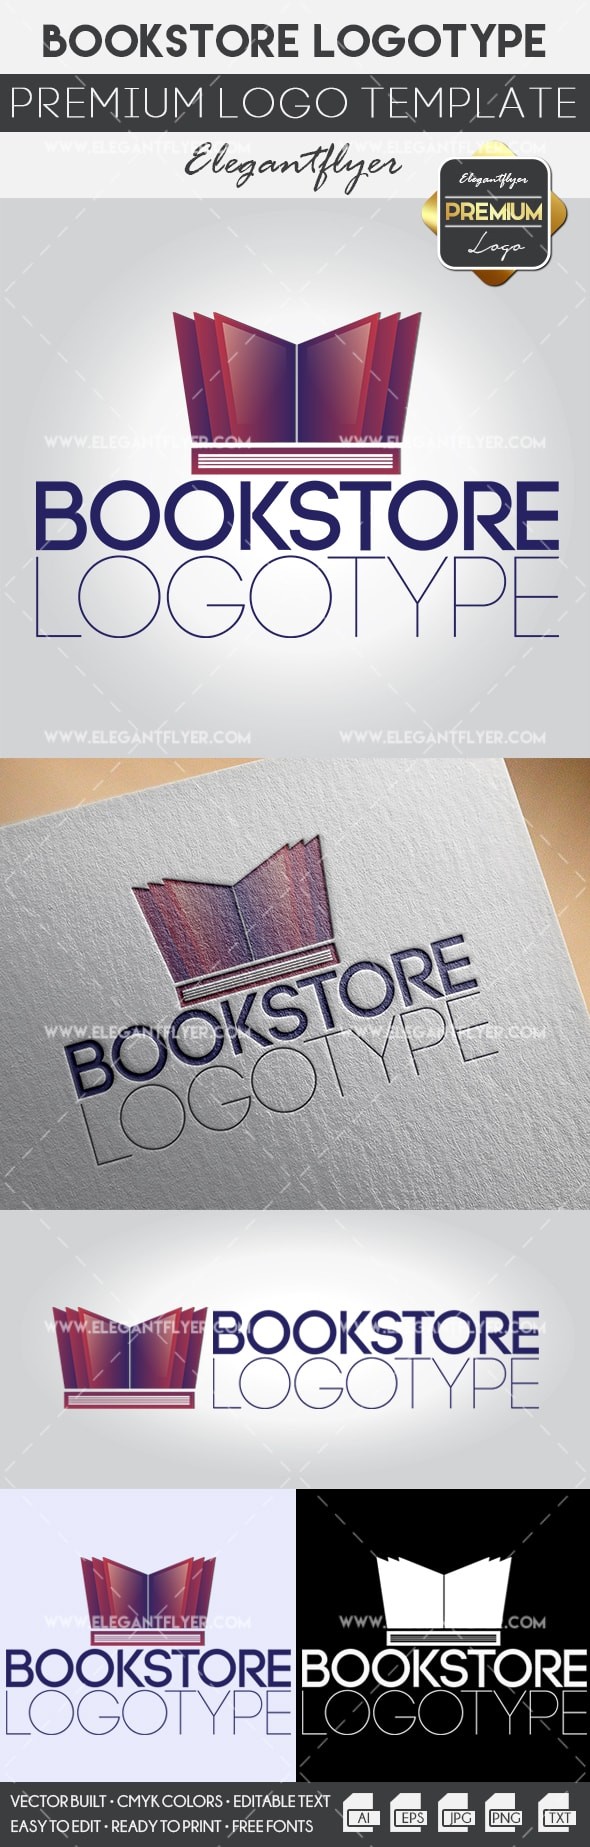 Bookstore by ElegantFlyer